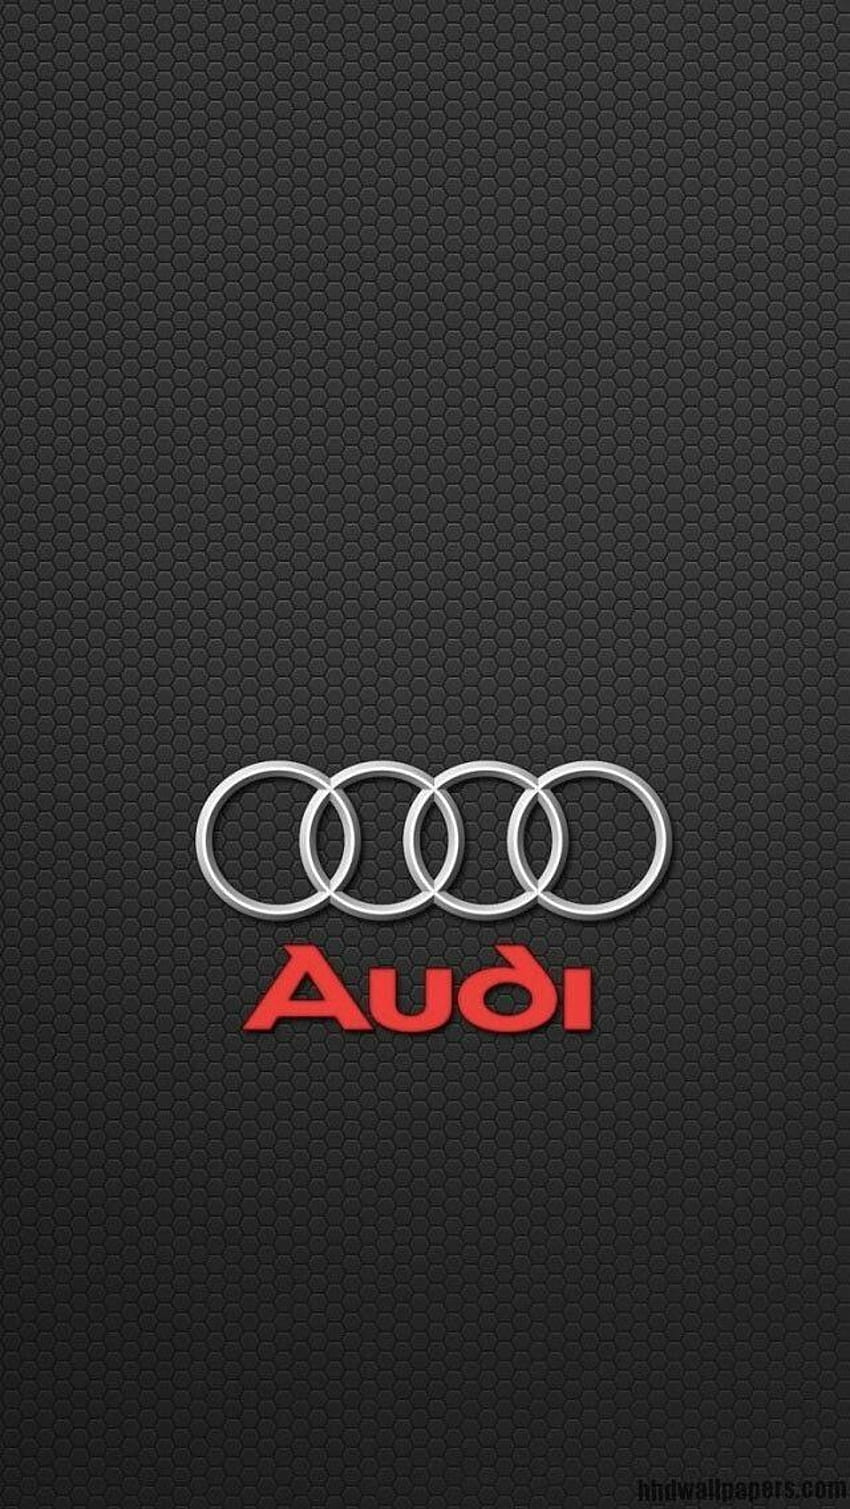 Audi Logo Photos Download The BEST Free Audi Logo Stock Photos  HD Images